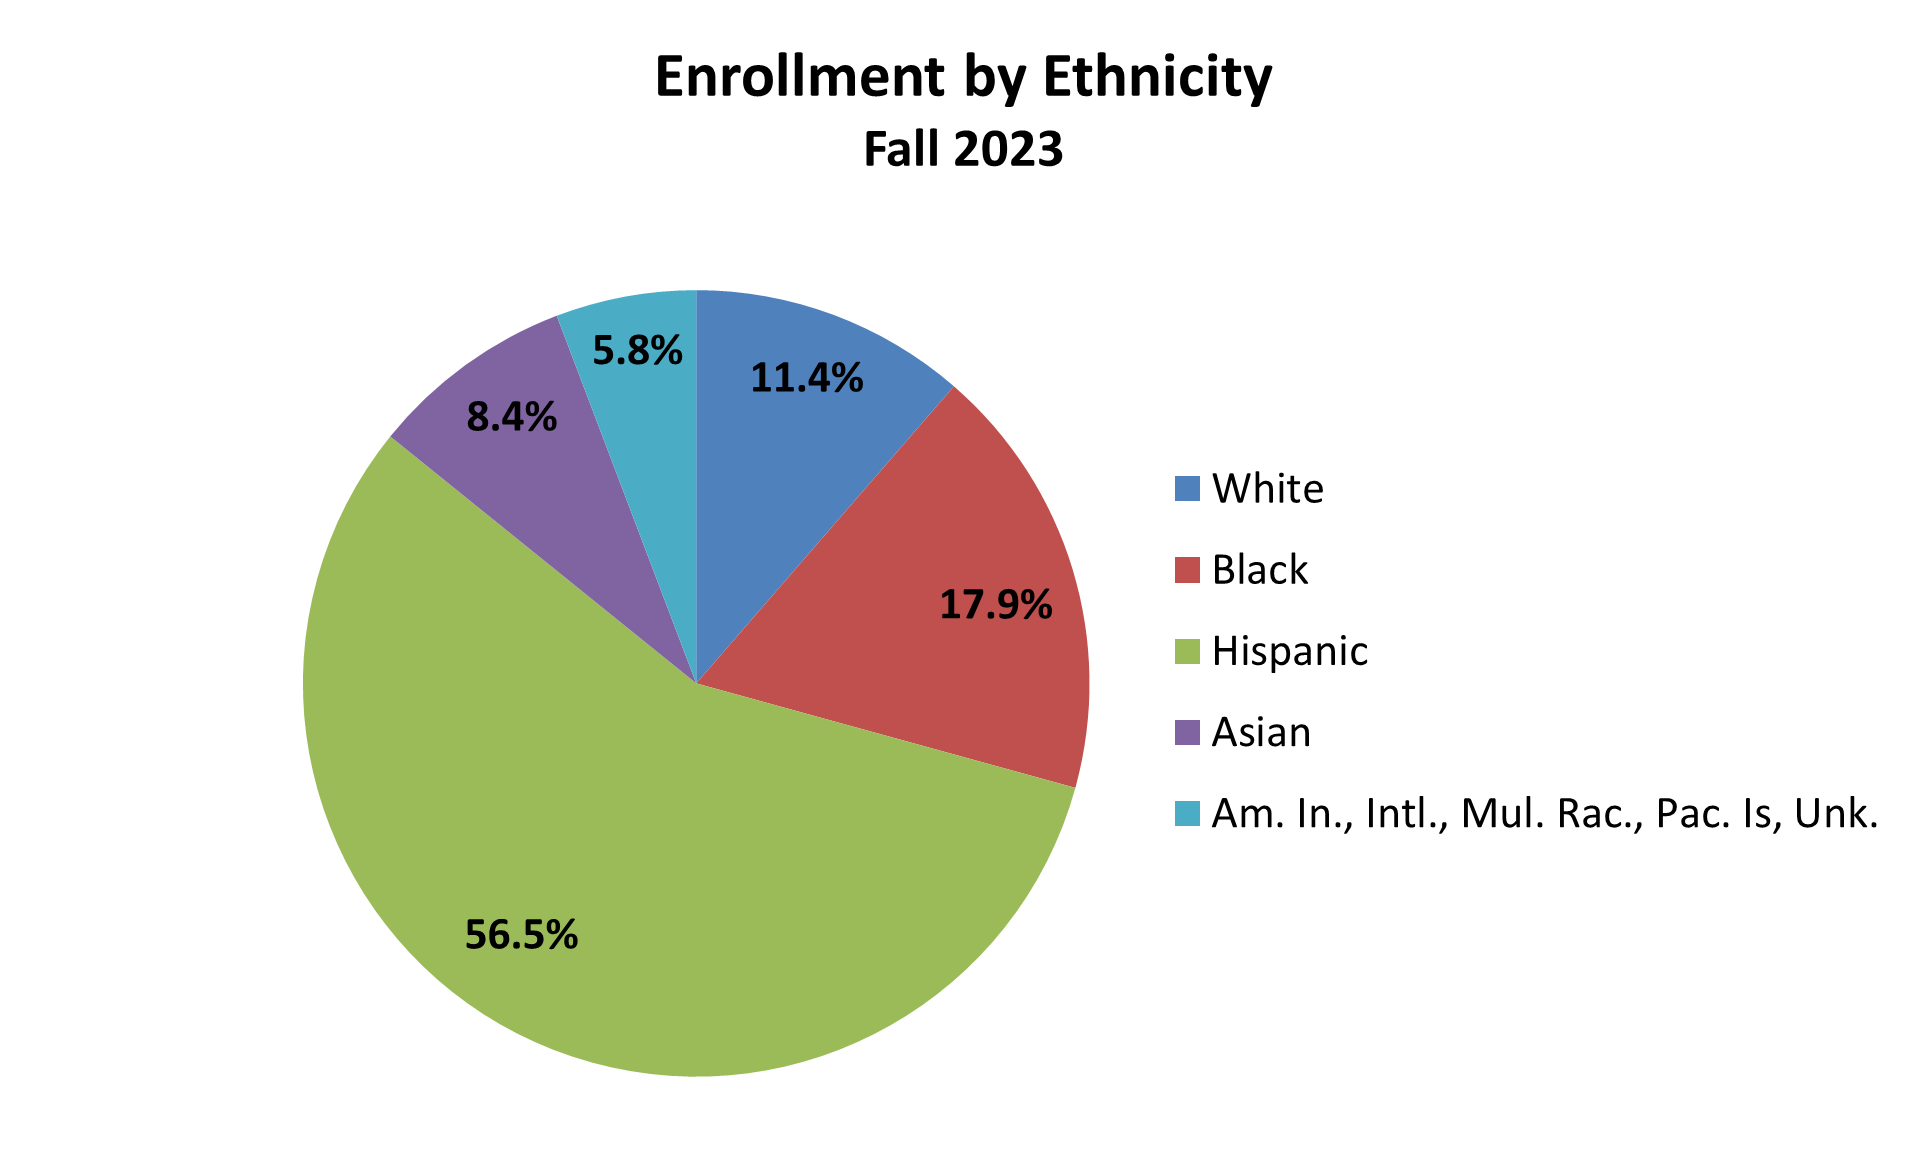 Enrollment by ethnicity pie chart